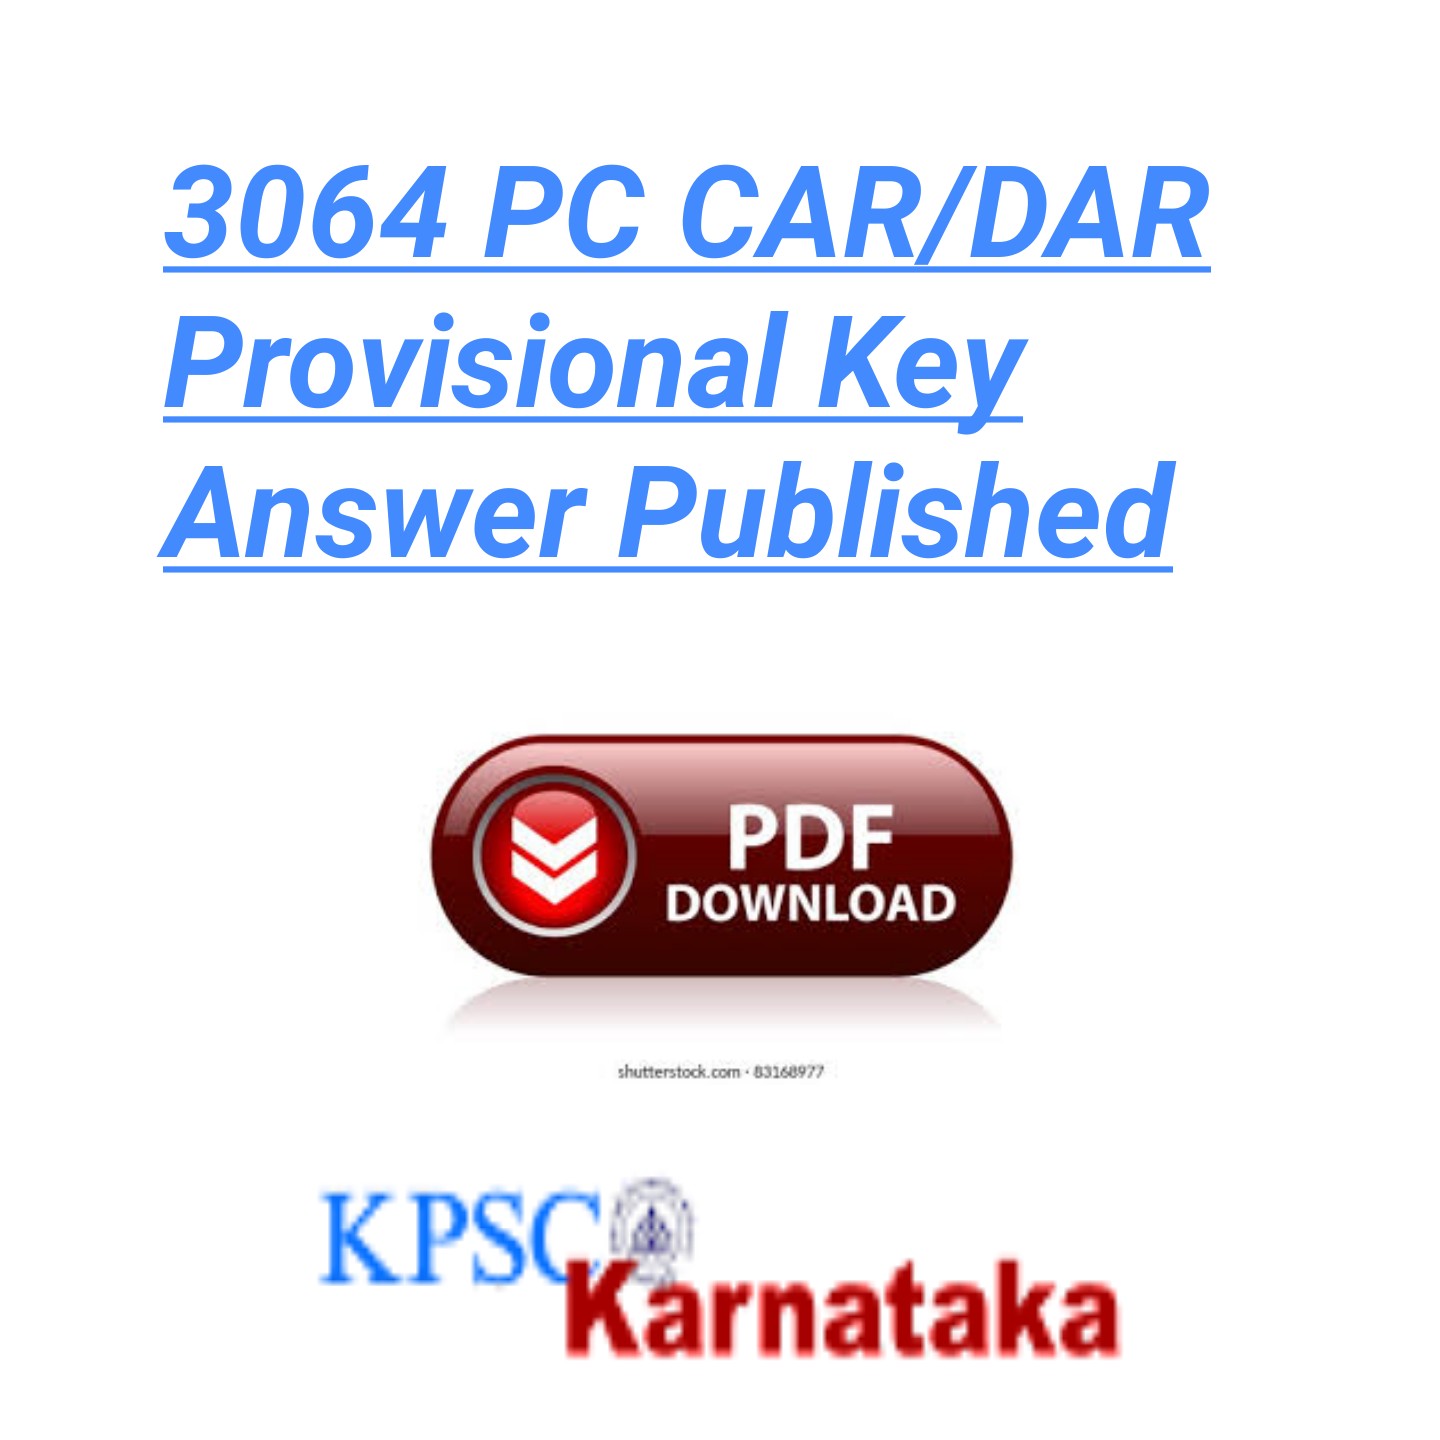 3064 PC CAR/DAR Provisional Key Answer Published